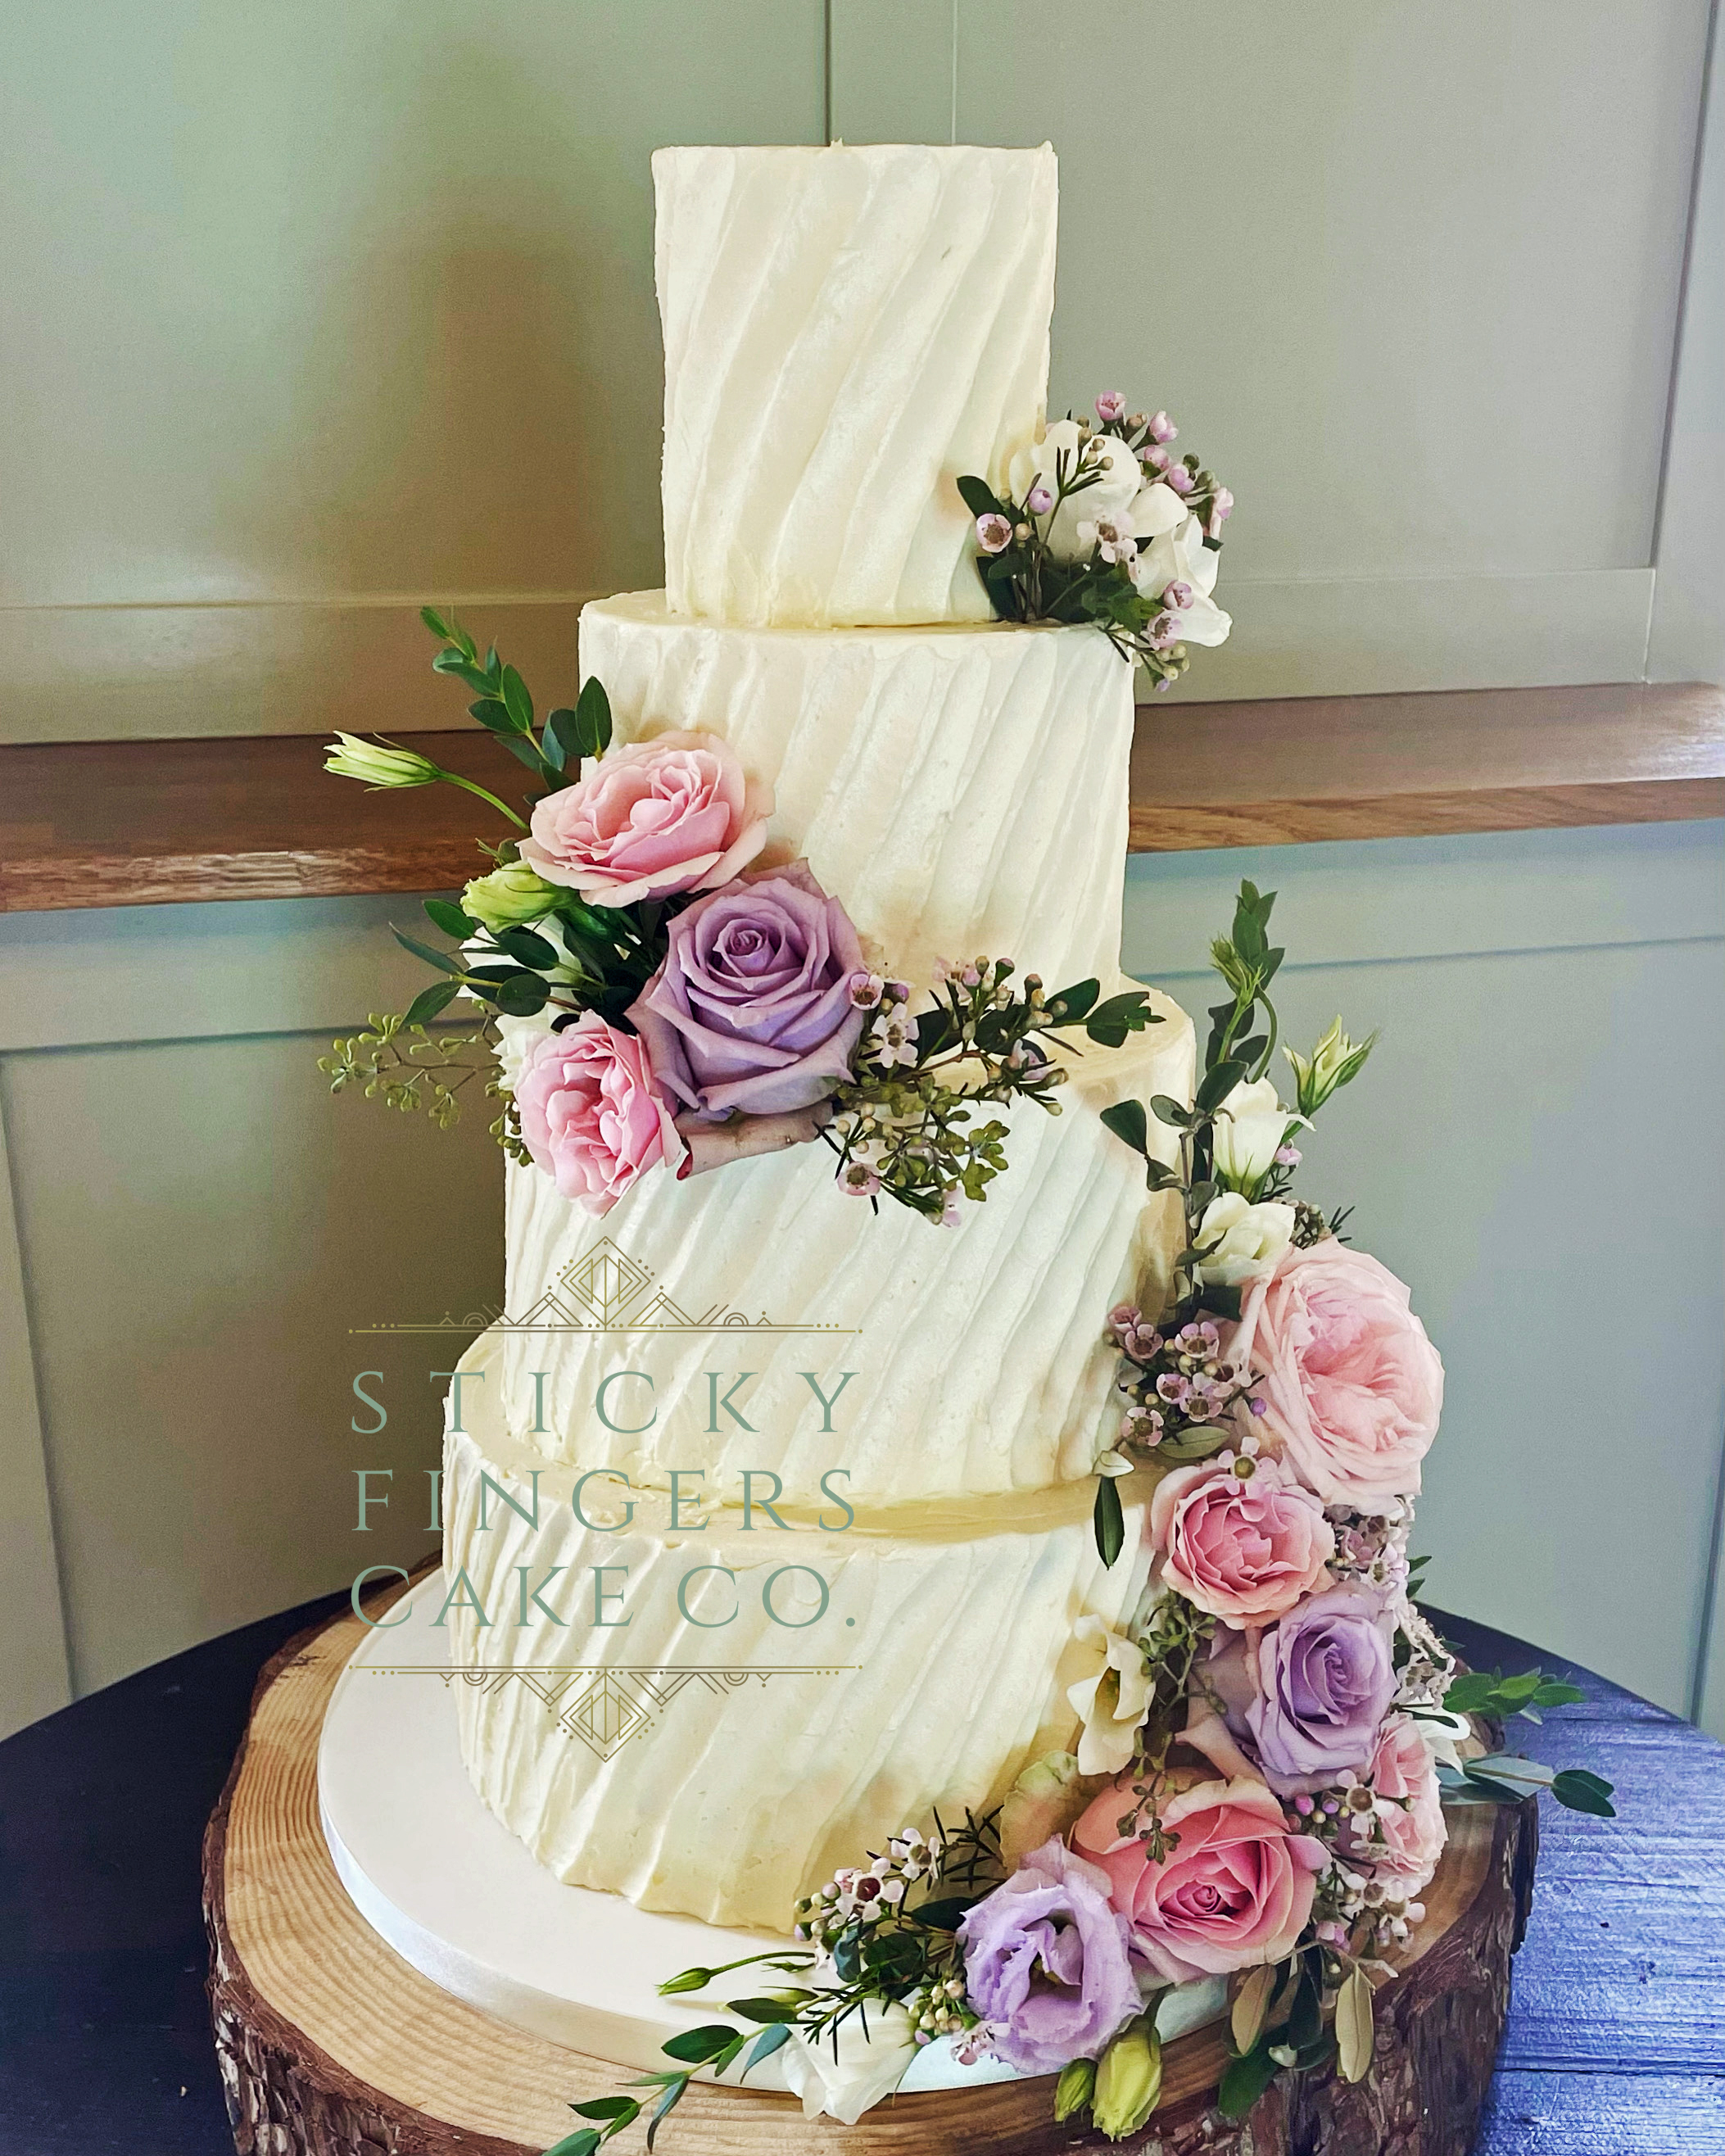 4-tier Buttercream Wedding Cake, Apton Hall, Rochford – September 2022